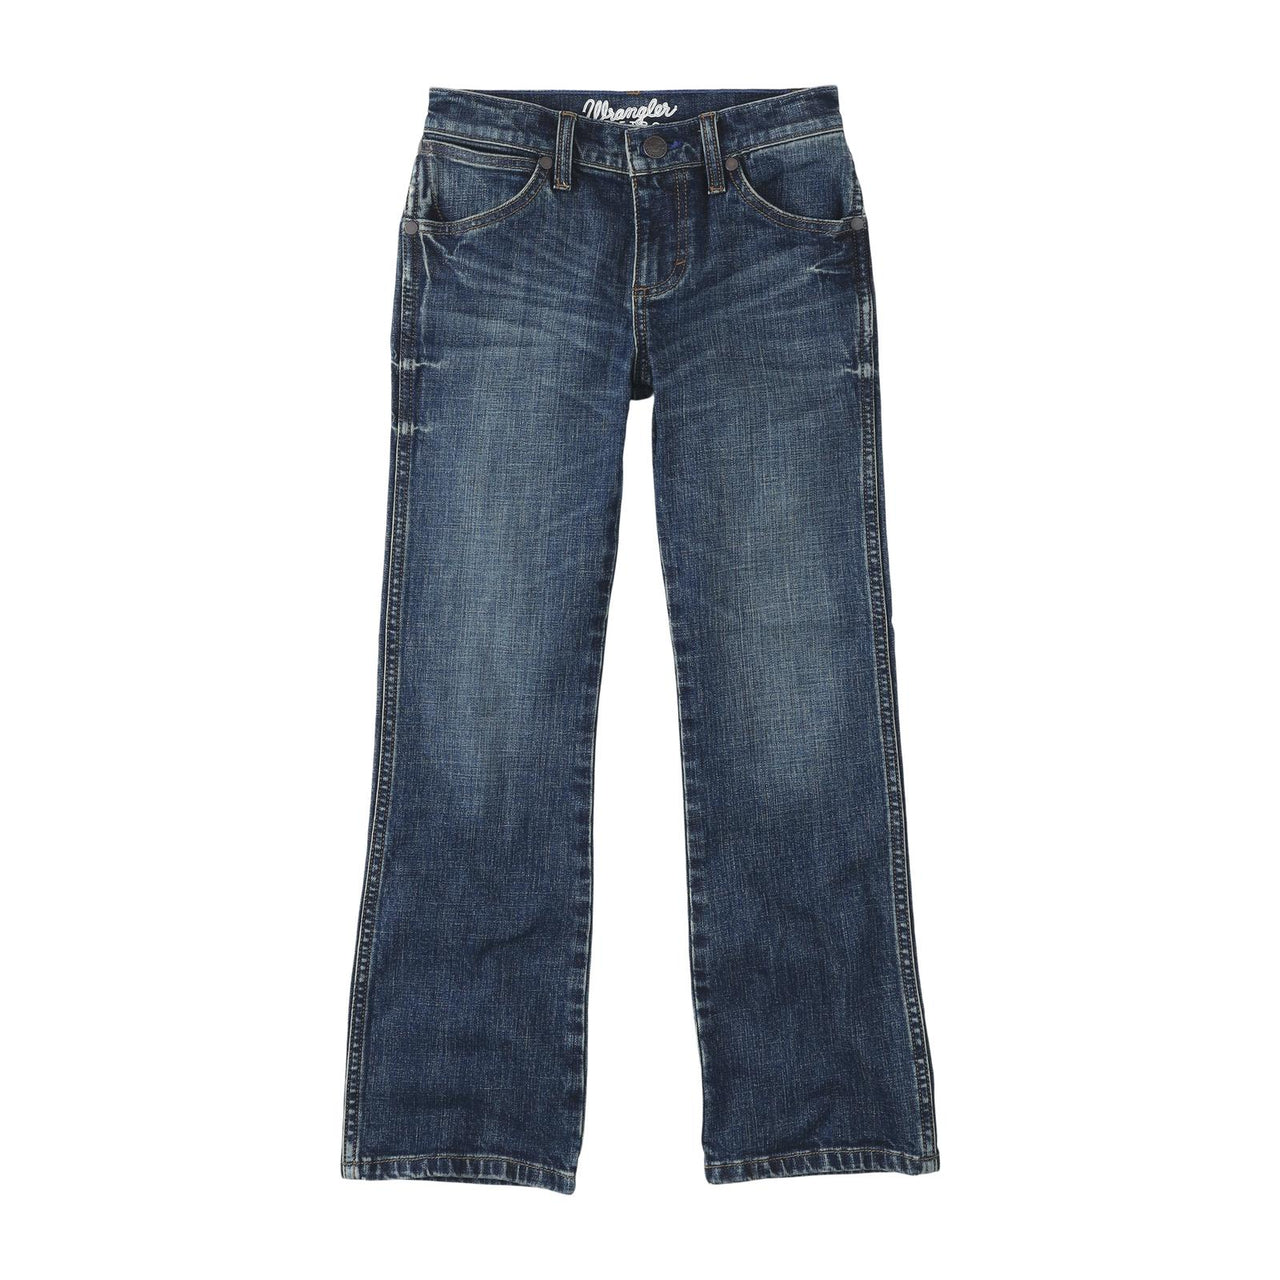 Wrangler Men's Retro Slim Bootcut Jeans - Oleson